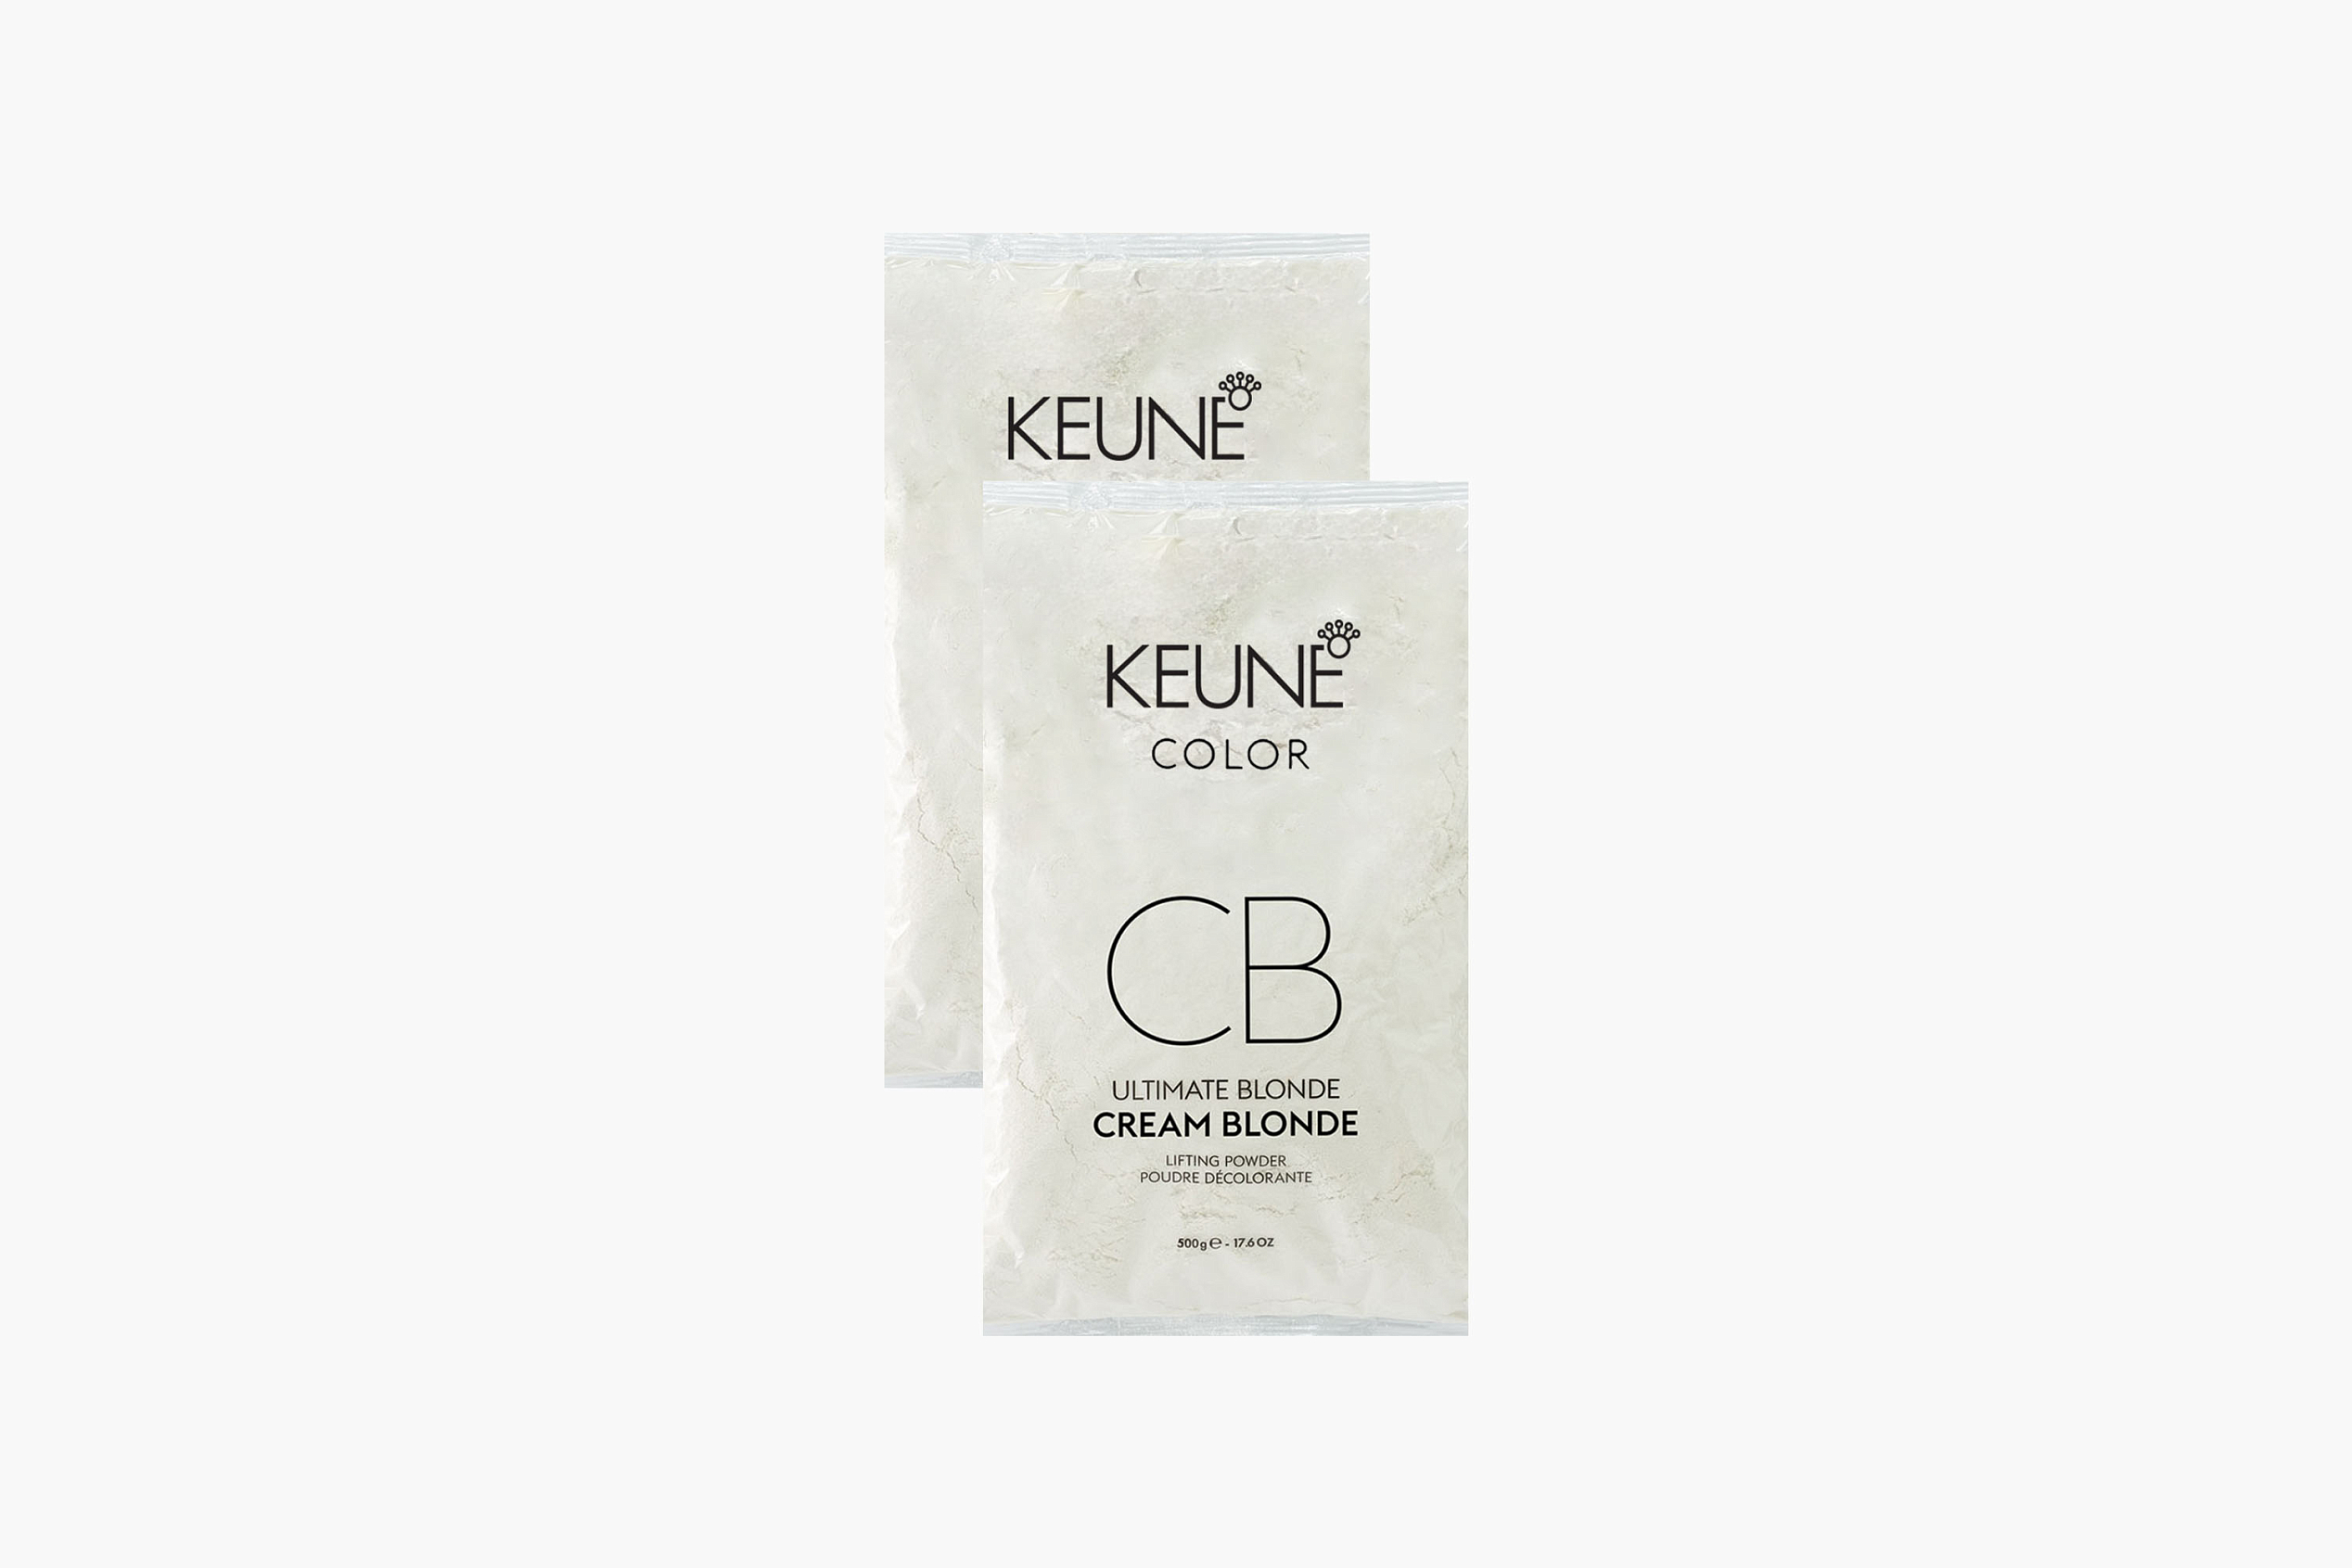 Keune Ub Cream Blonde Refill фото 1